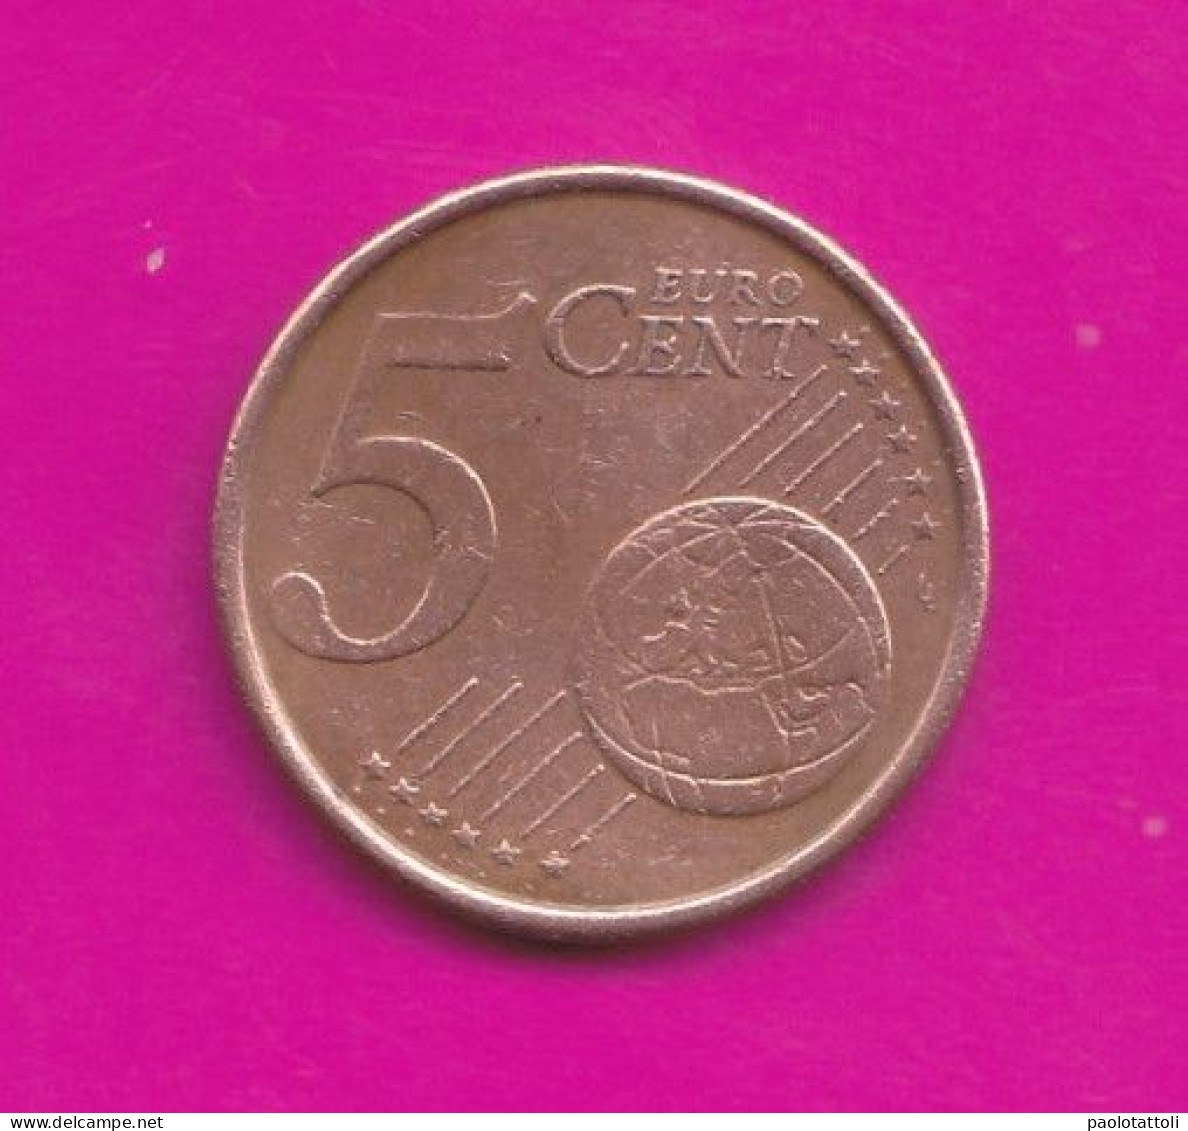 Spain, 1999- 5 Euro Cent- Copper Plated Steel- Obverse Cathedral Of Santiago De Campostela. Reverse Denomination - Spanien